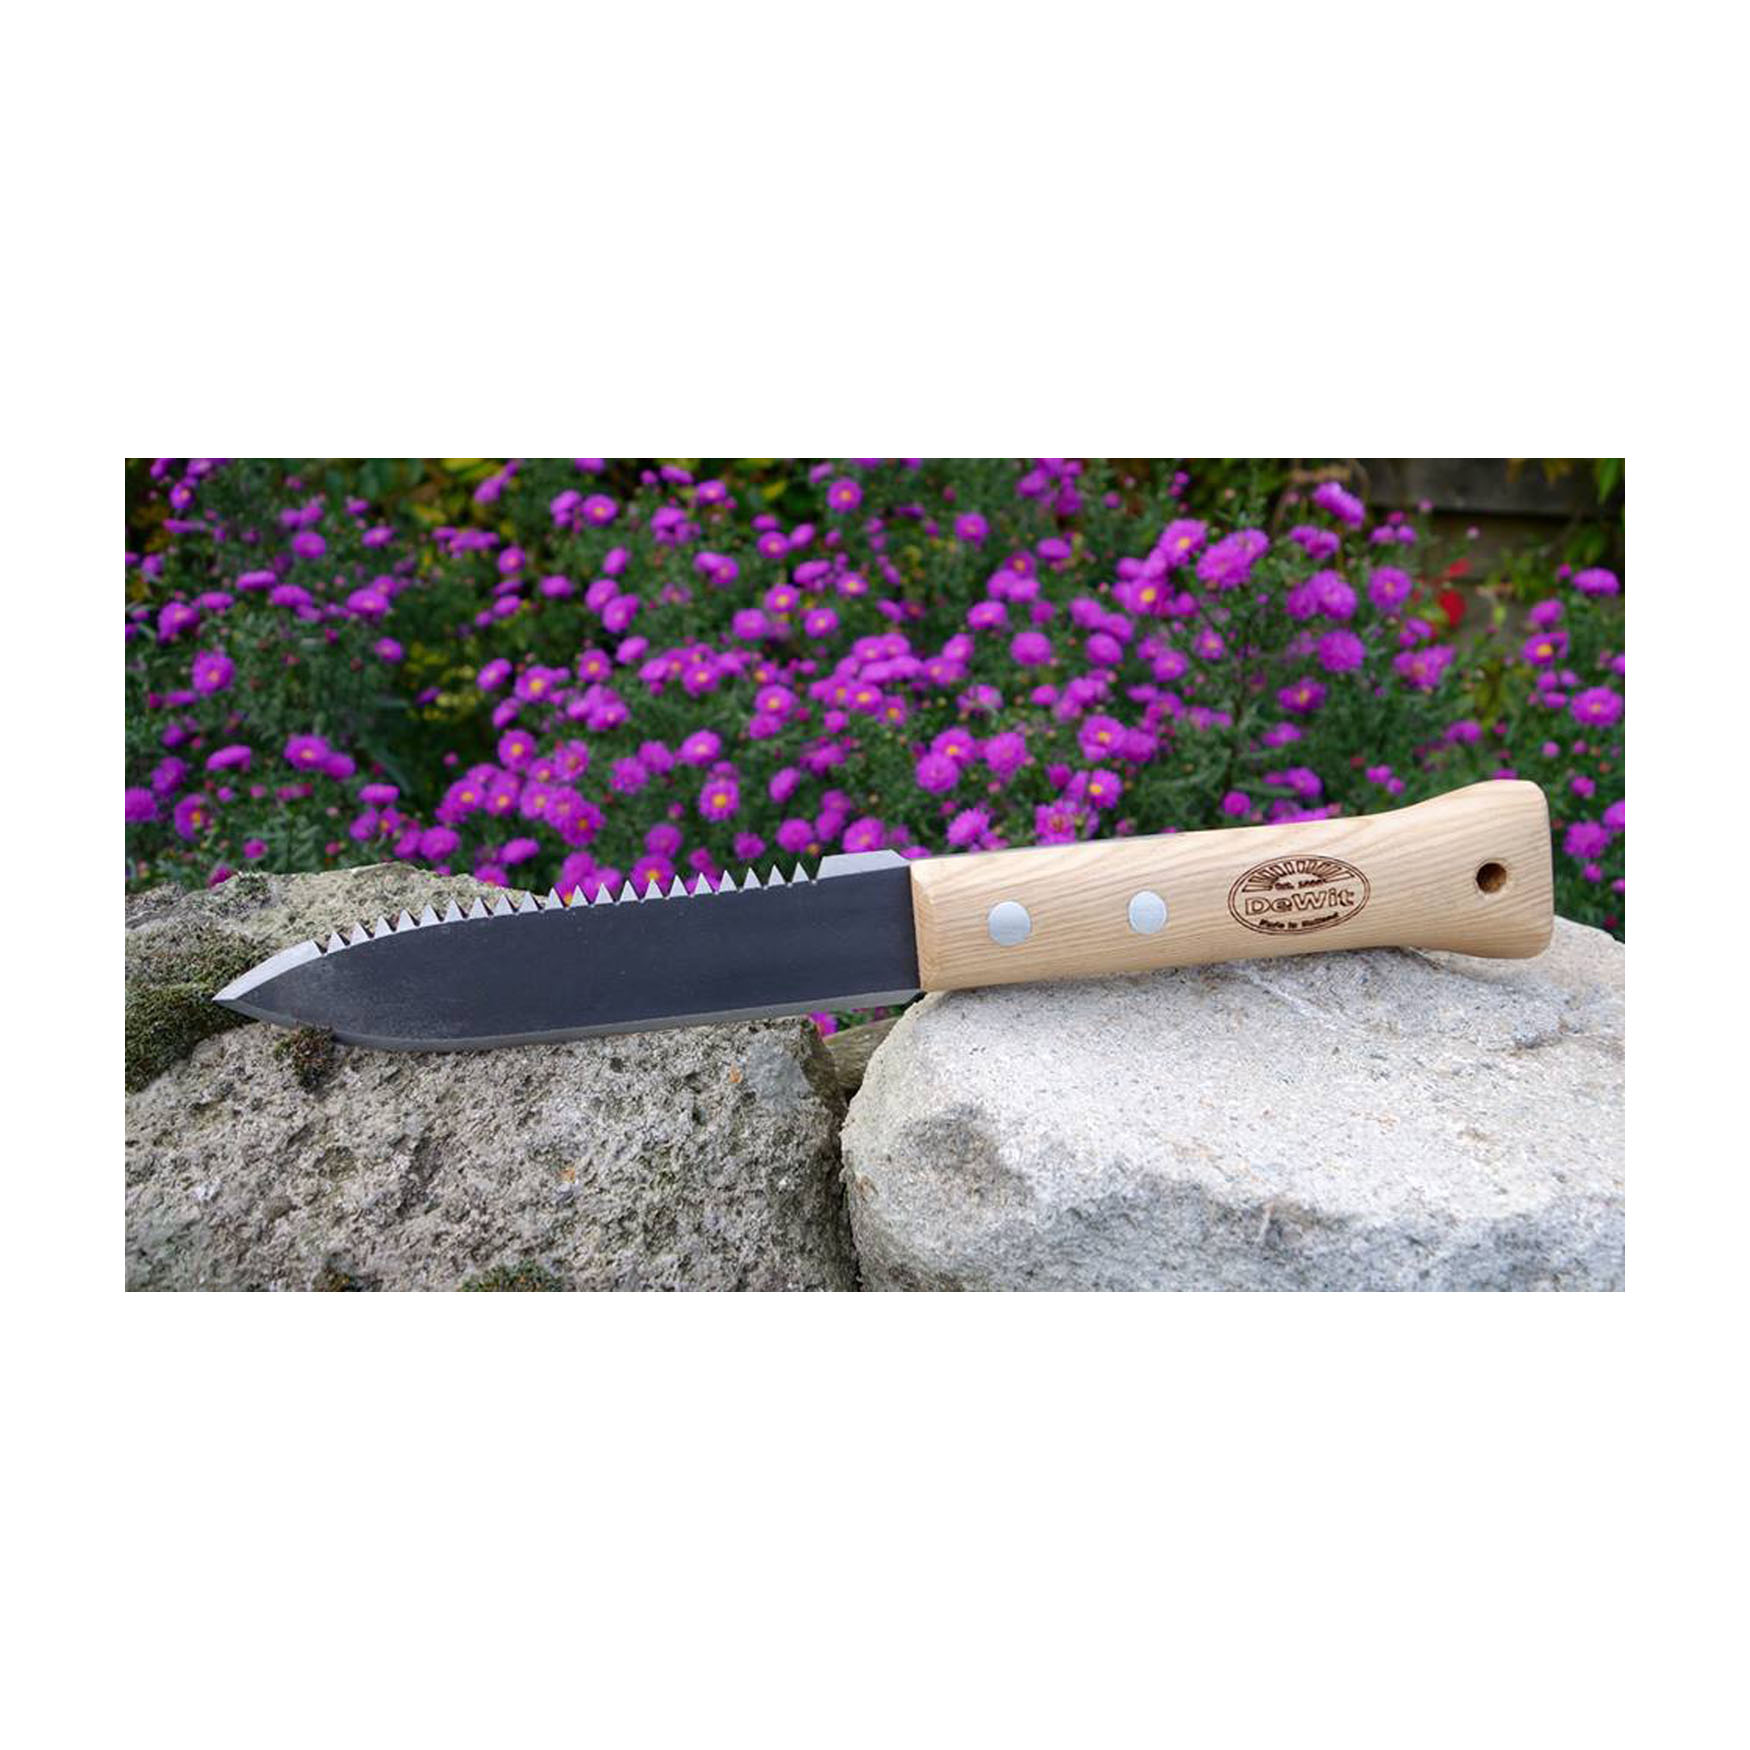 DeWit Knife - Serrated Farmers Dagger